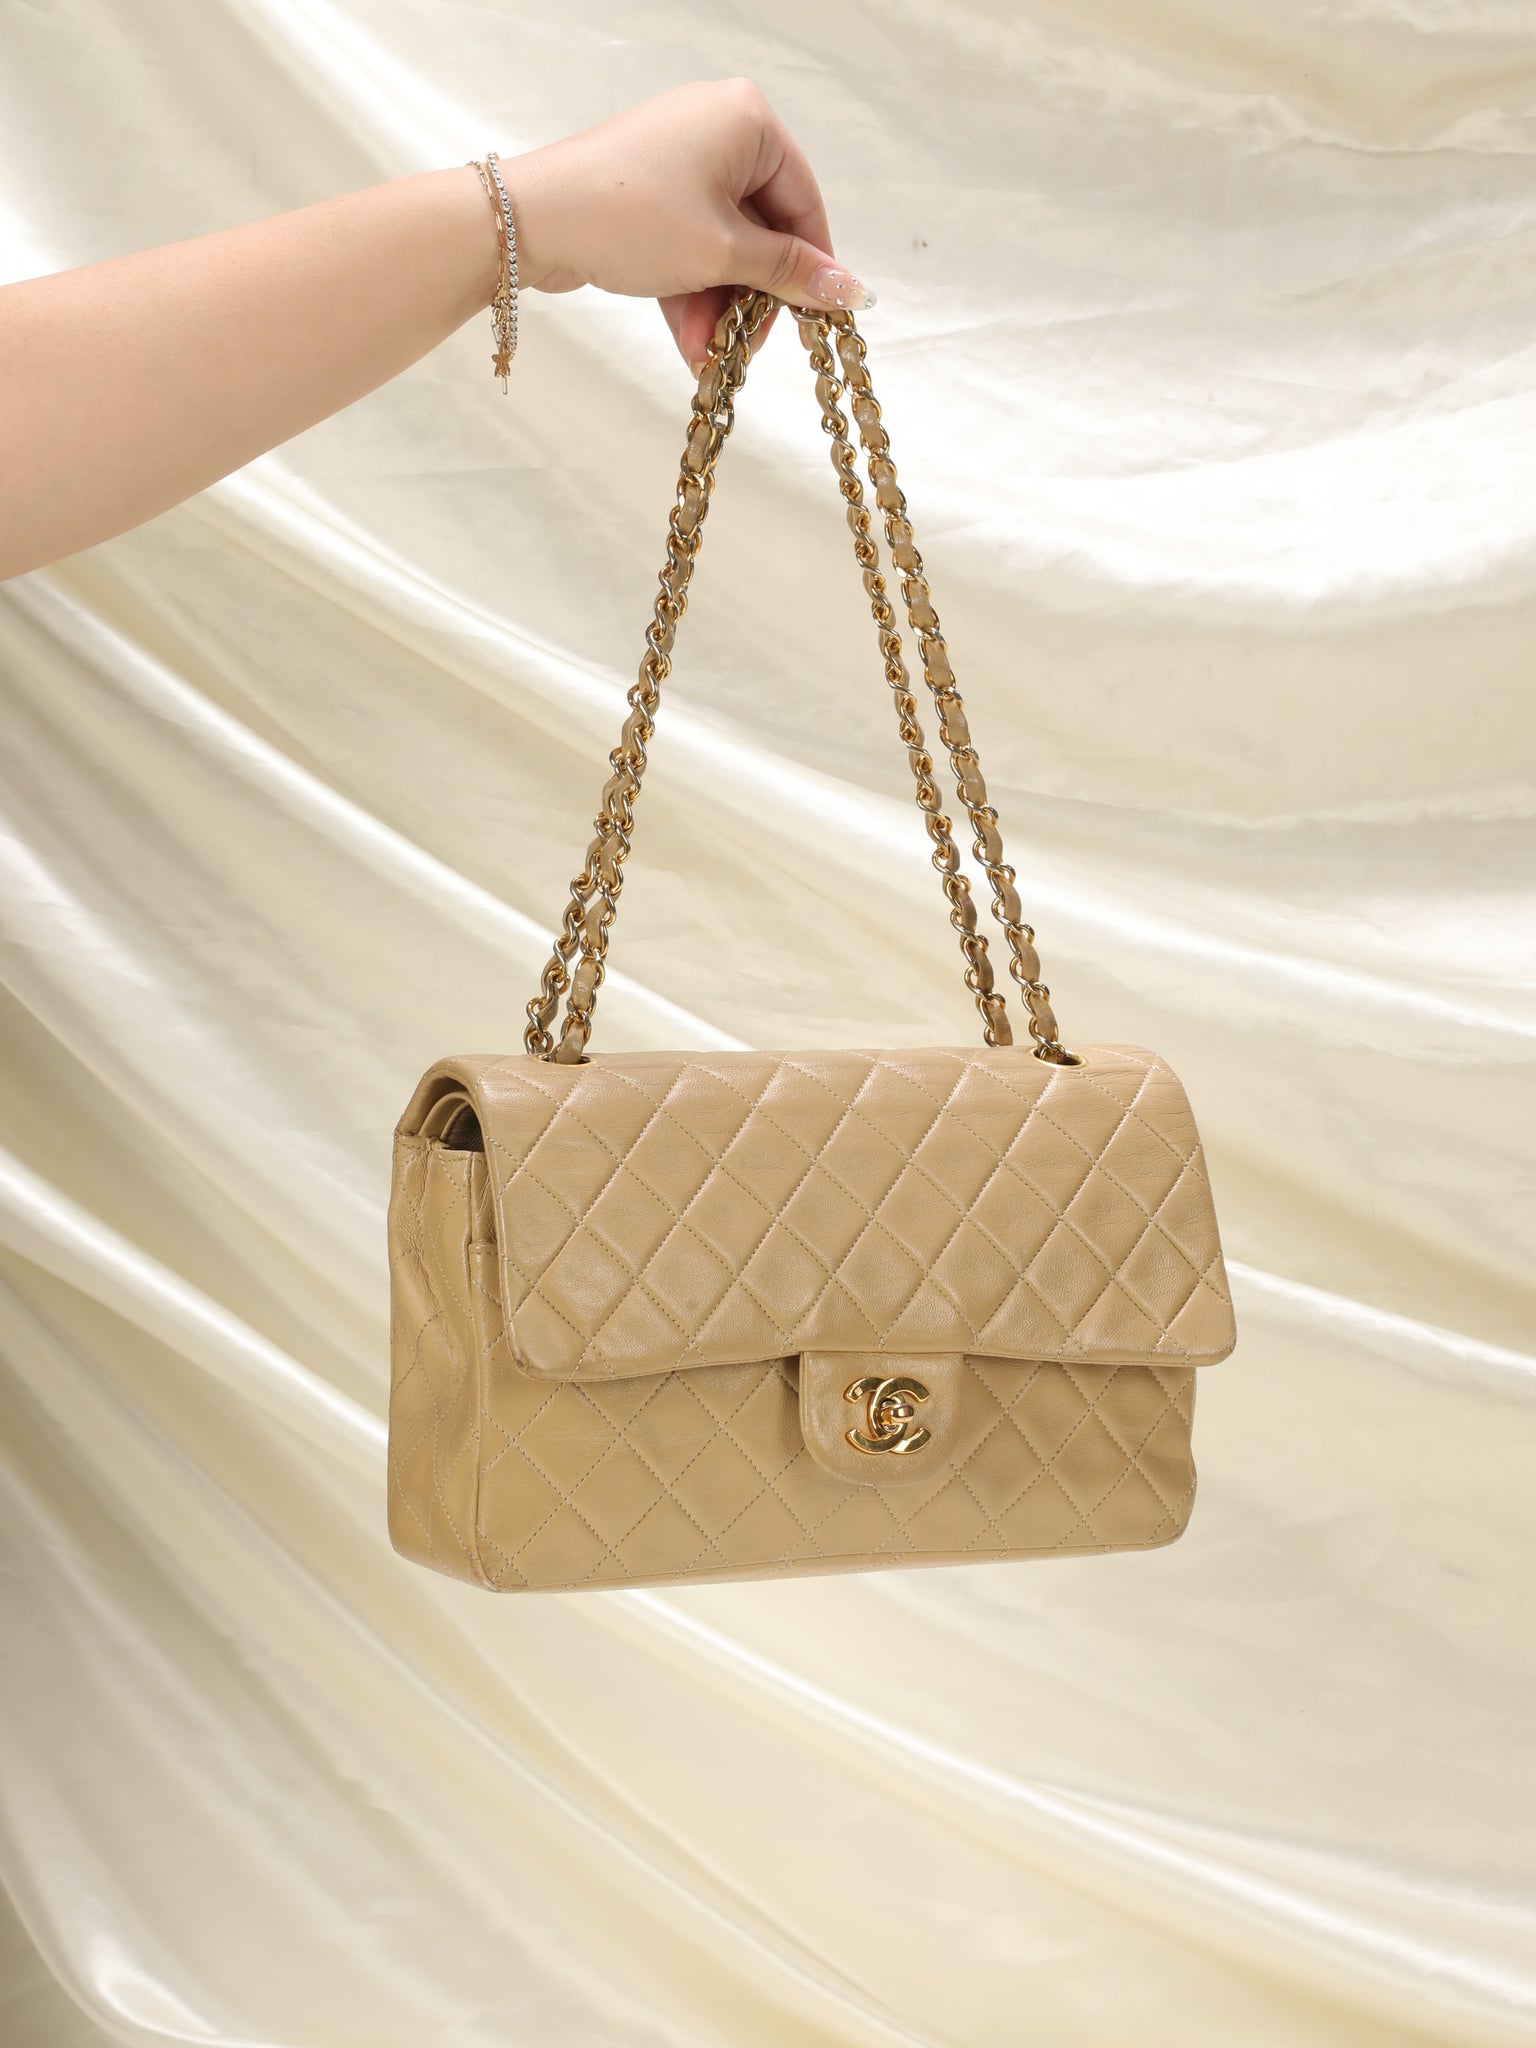 Chanel Beige Medium Classic Flap Bag